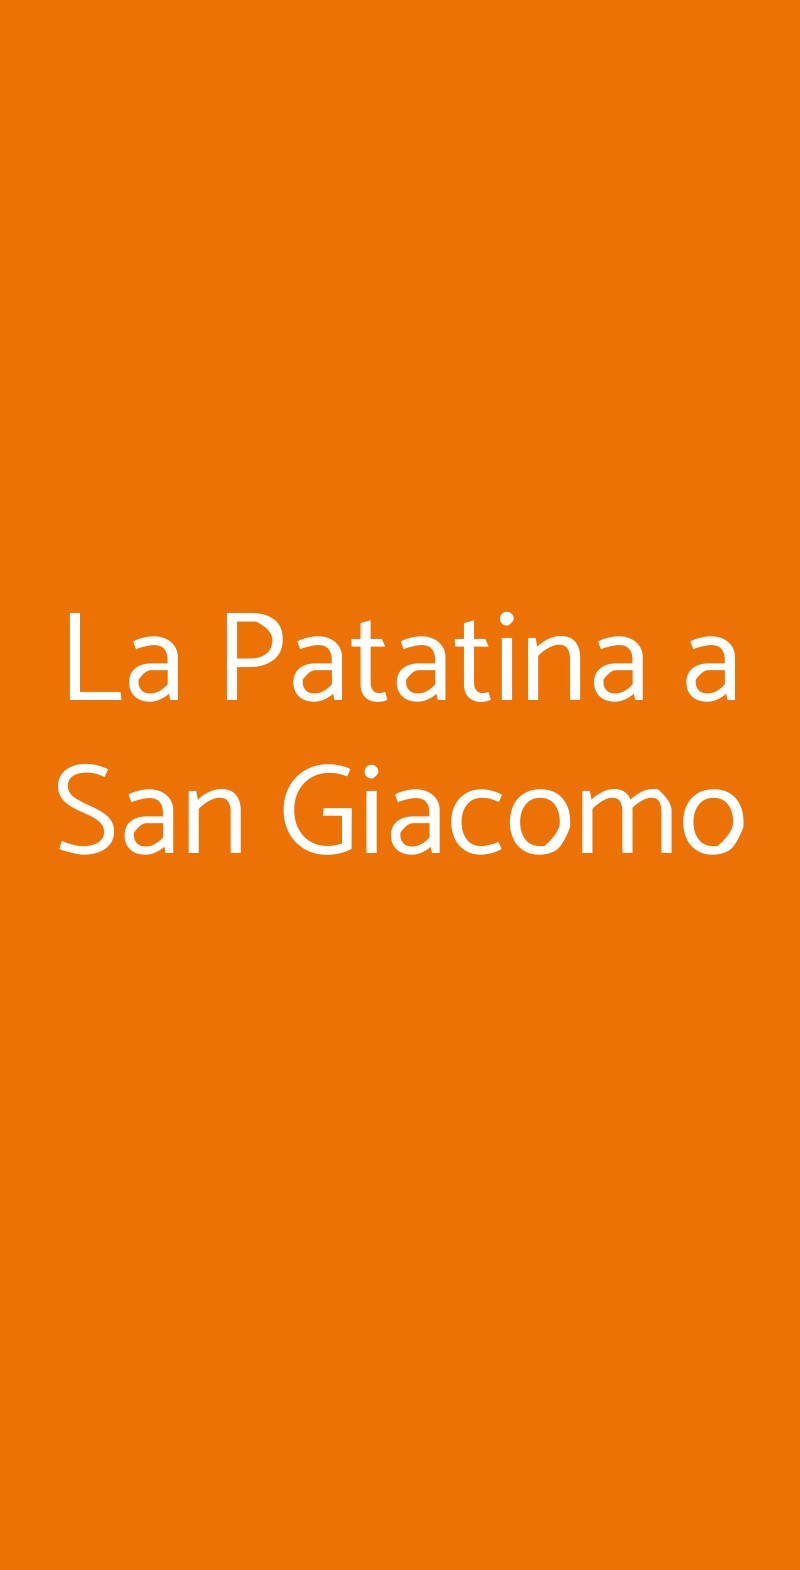 La Patatina a San Giacomo Venezia menù 1 pagina